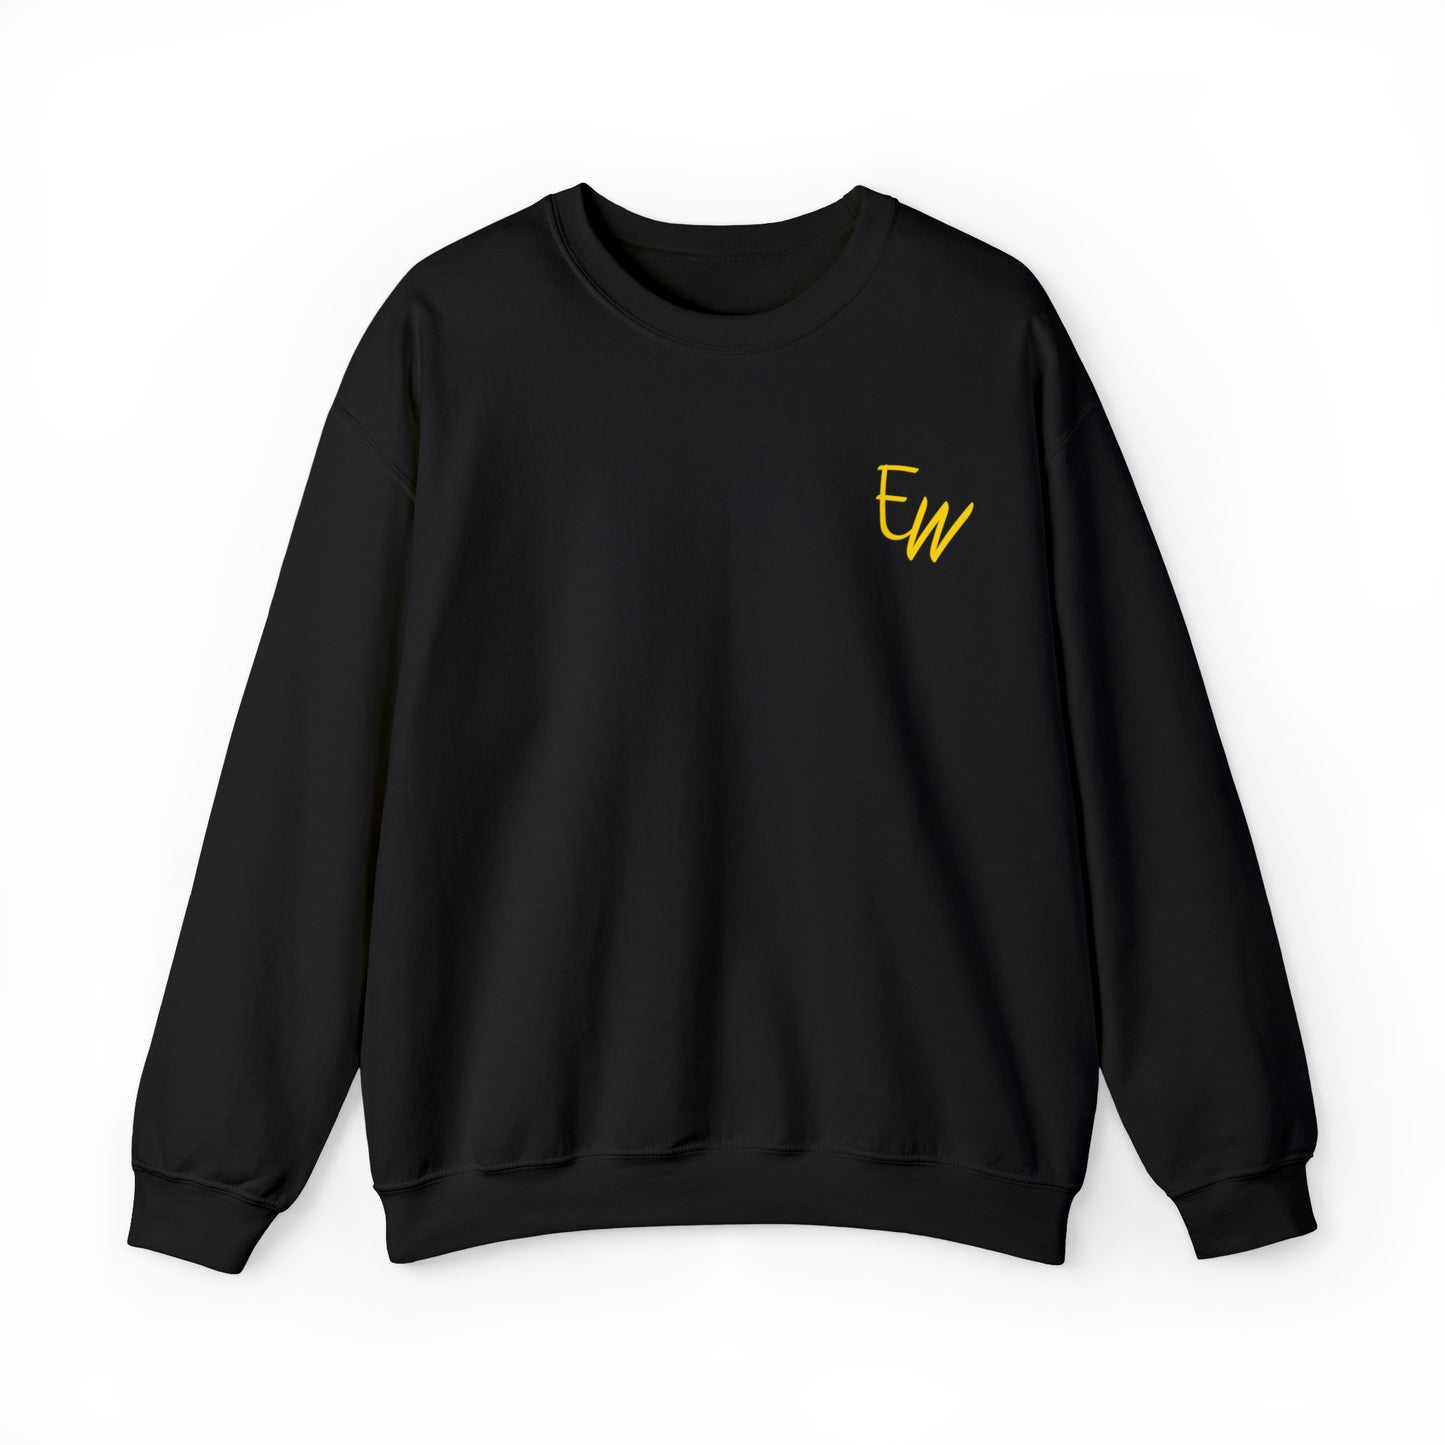 Evan Whiteside: Smile Crewneck Sweatshirt